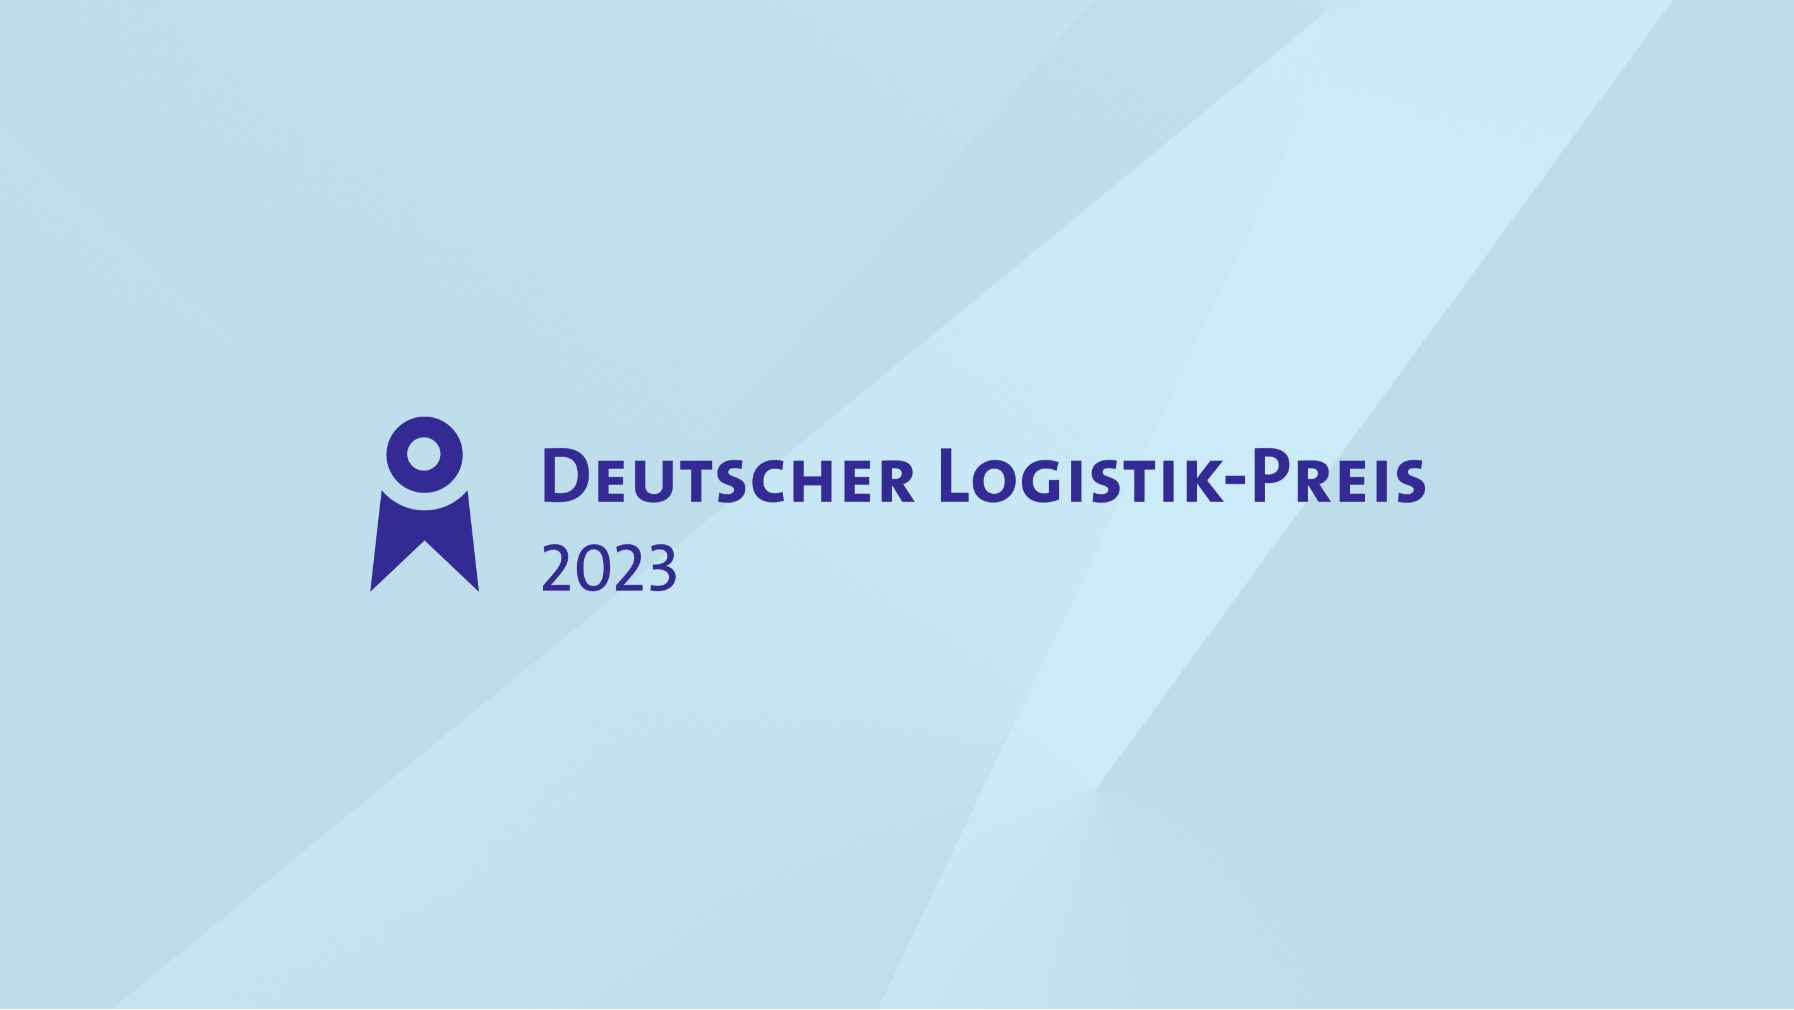 Deutscher Logistik-Preis 2023 modility